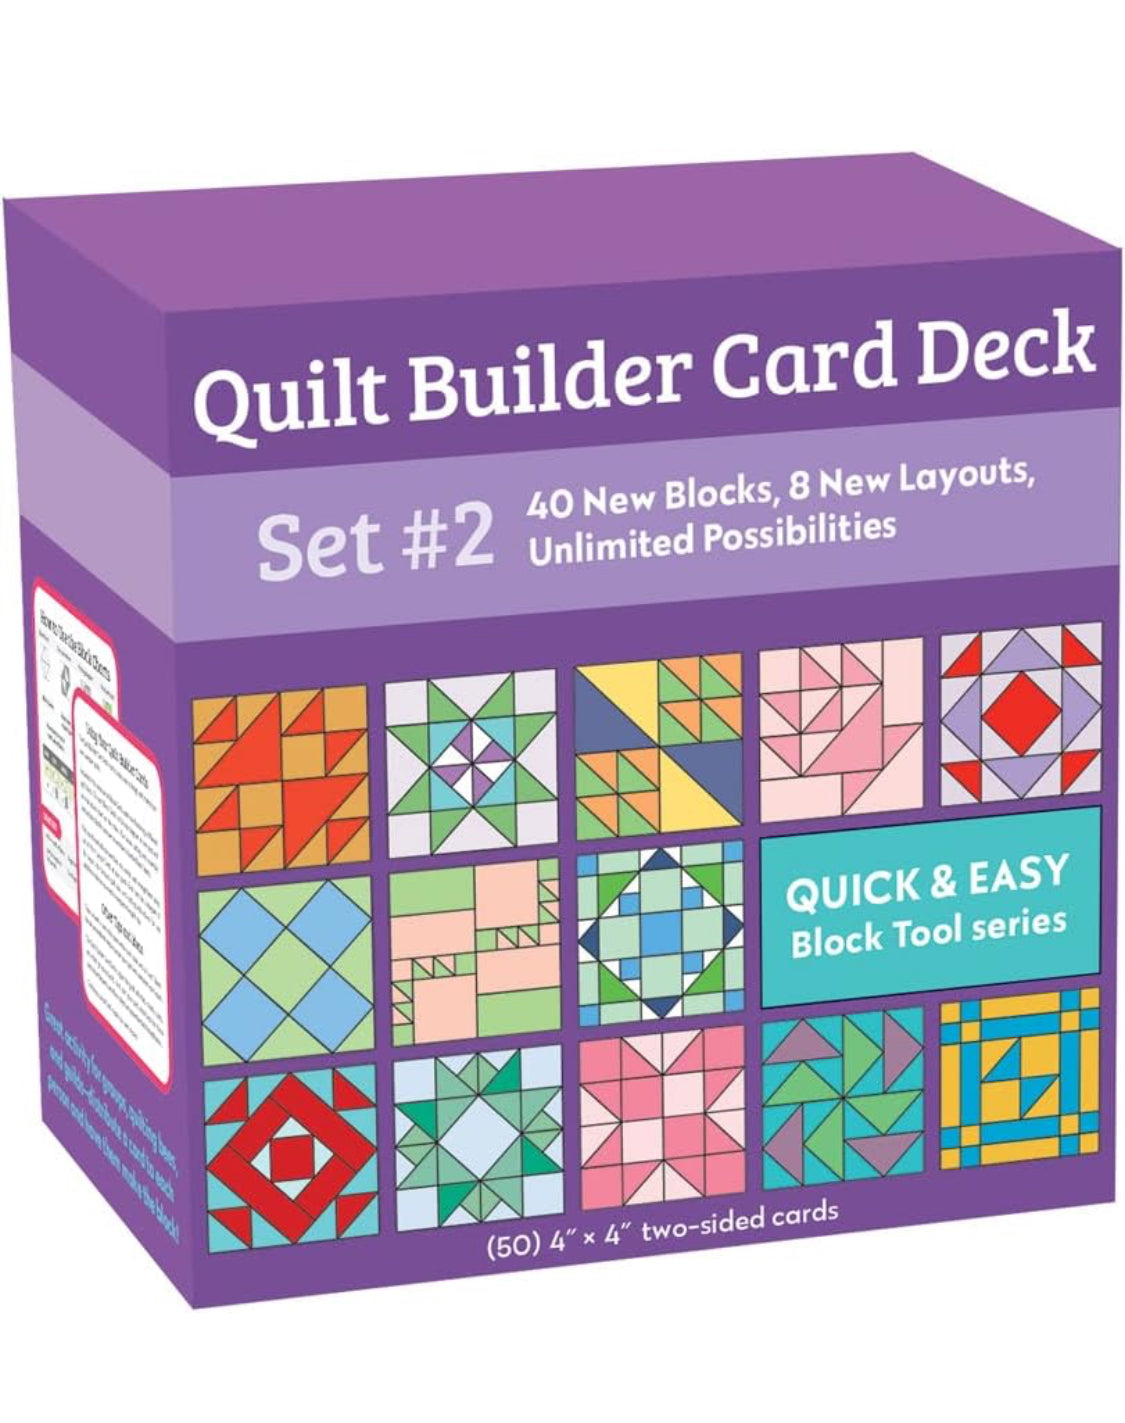 Quilt Builder Card Deck Set #2: 40 More Blocks, 8 Inspiring Layouts, Infinite Possibilities